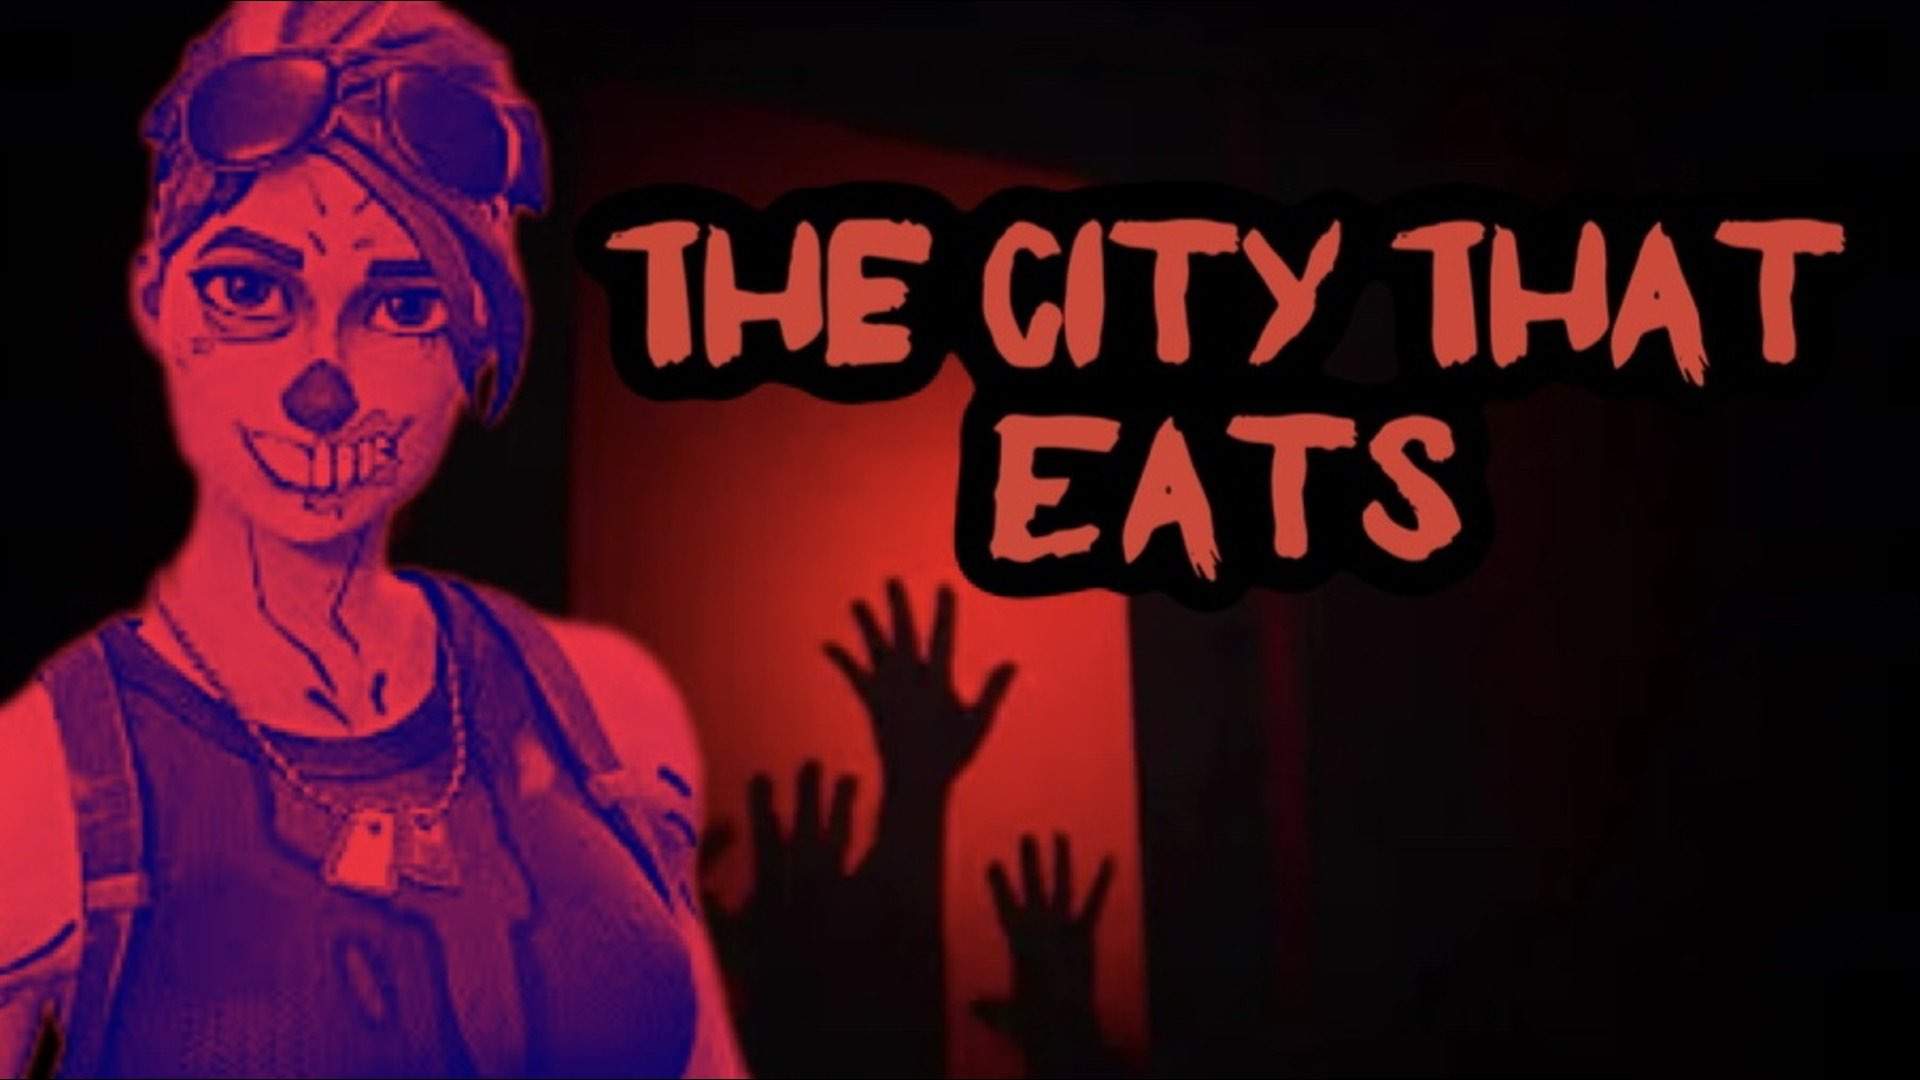 The City that Eats